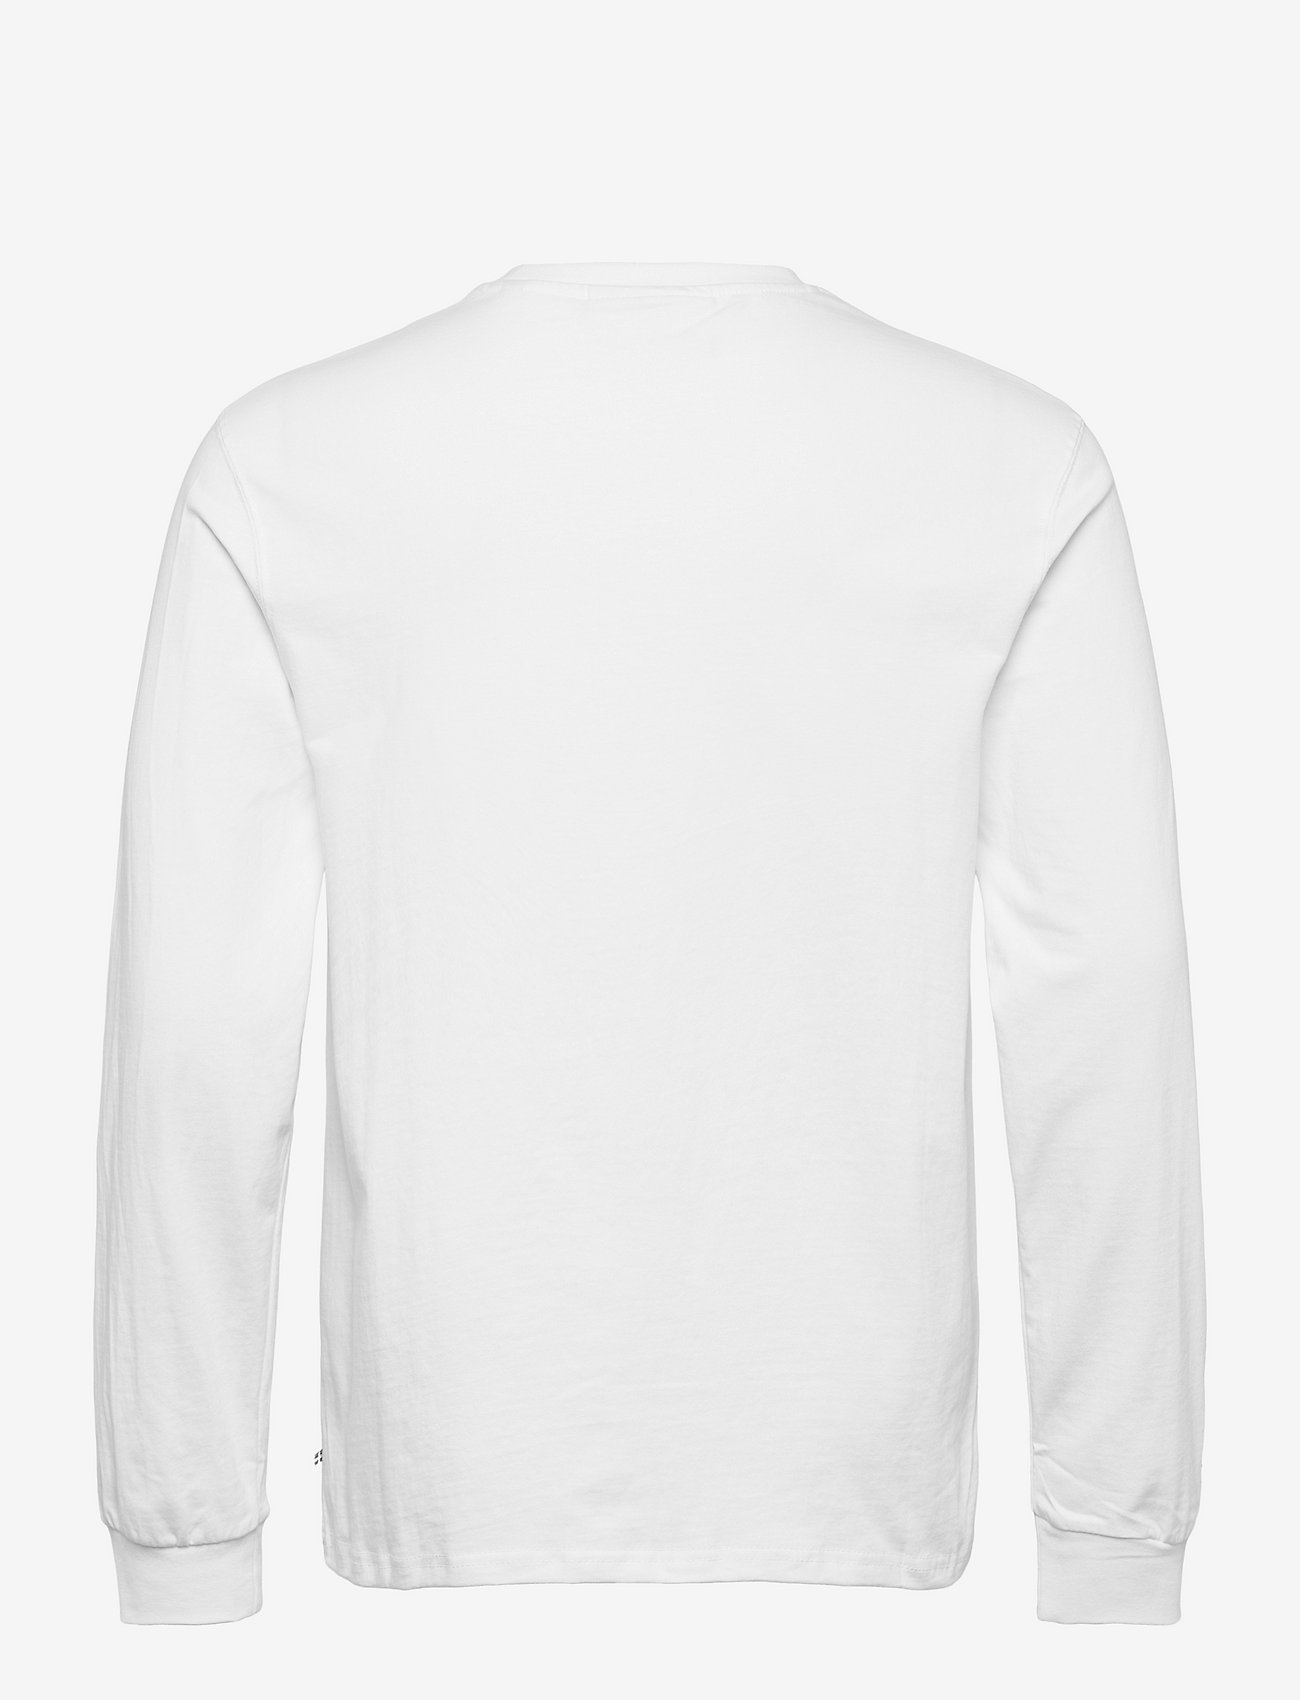 HAN Kjøbenhavn - Casual Tee Long Sleeve - t-shirts - white logo - 1